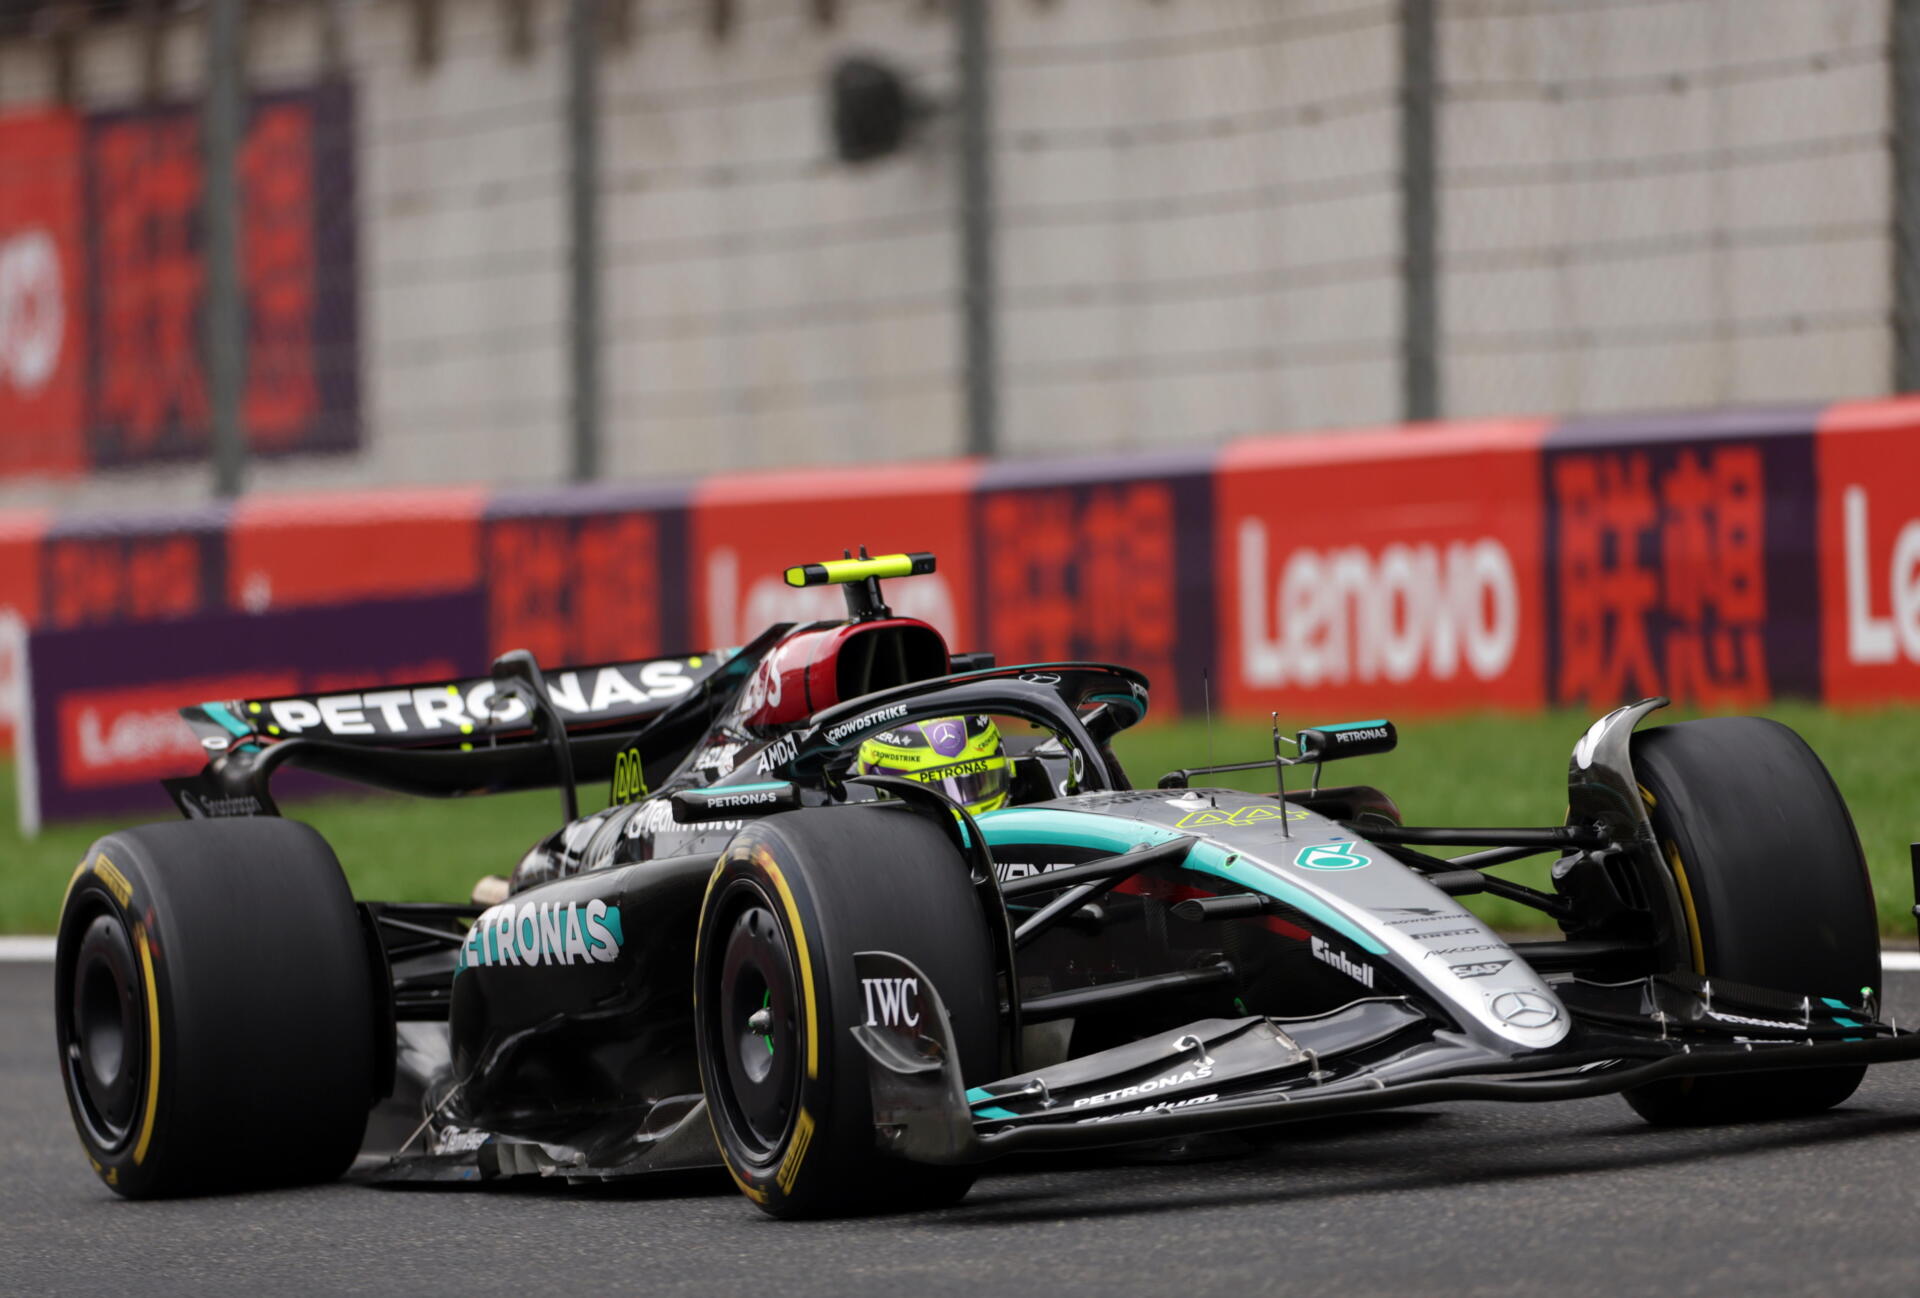 Hamilton cae eliminado en la primera ronda clasificatoria (Q1) en China